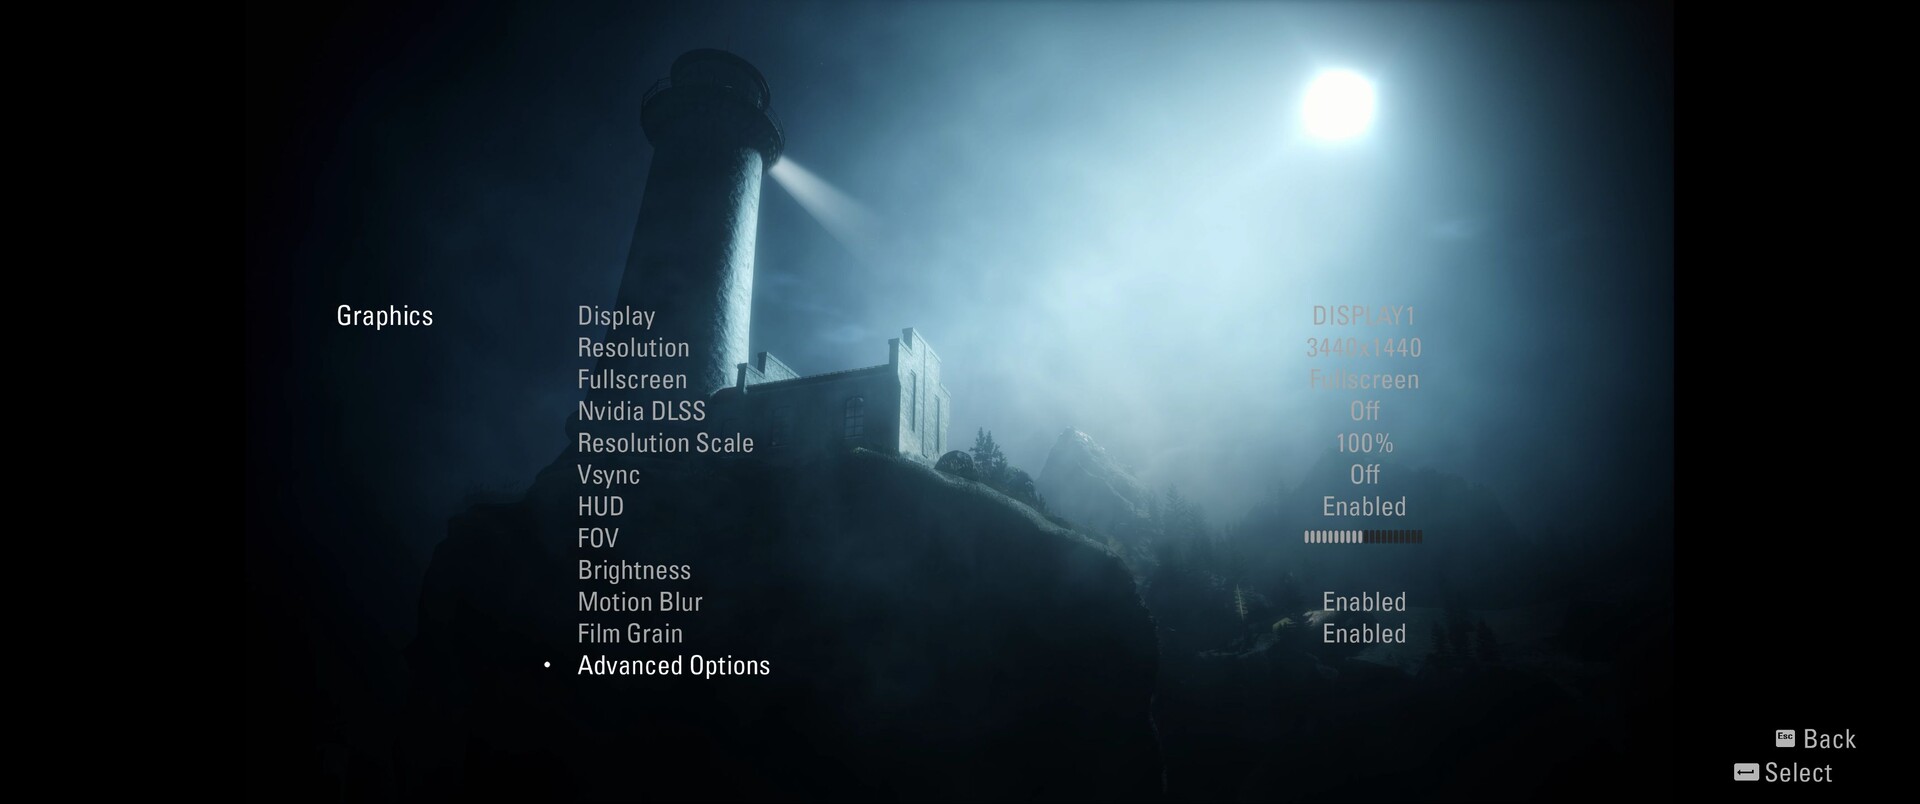 Alan Wake Remastered PC Graphics RTX 3080 Comparison Shows